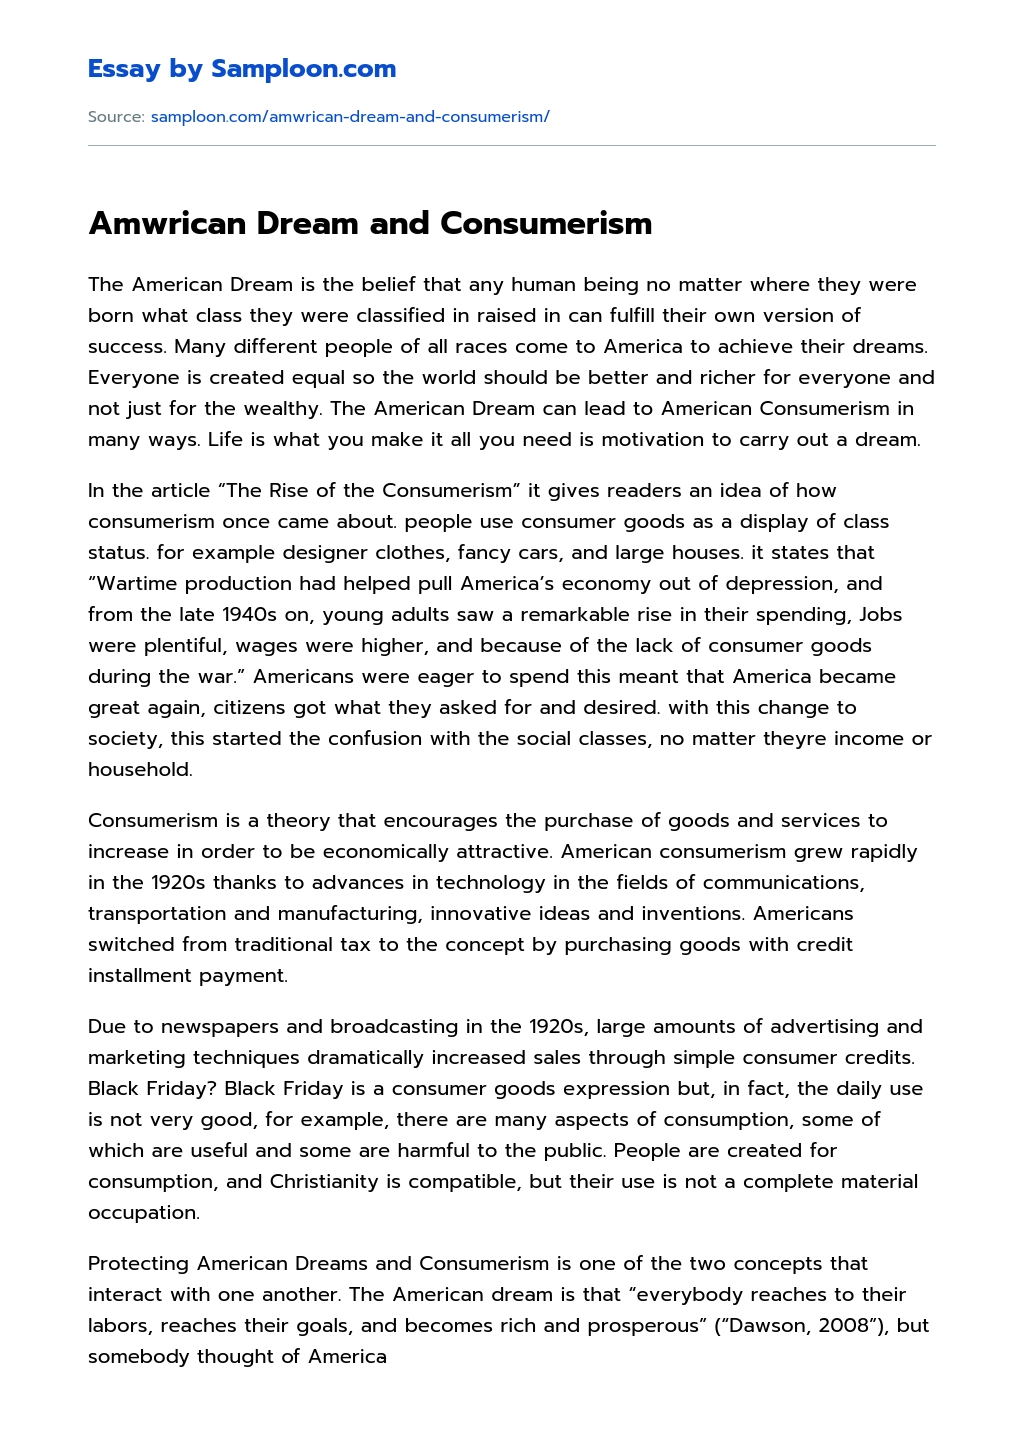 Amwrican Dream and Consumerism essay